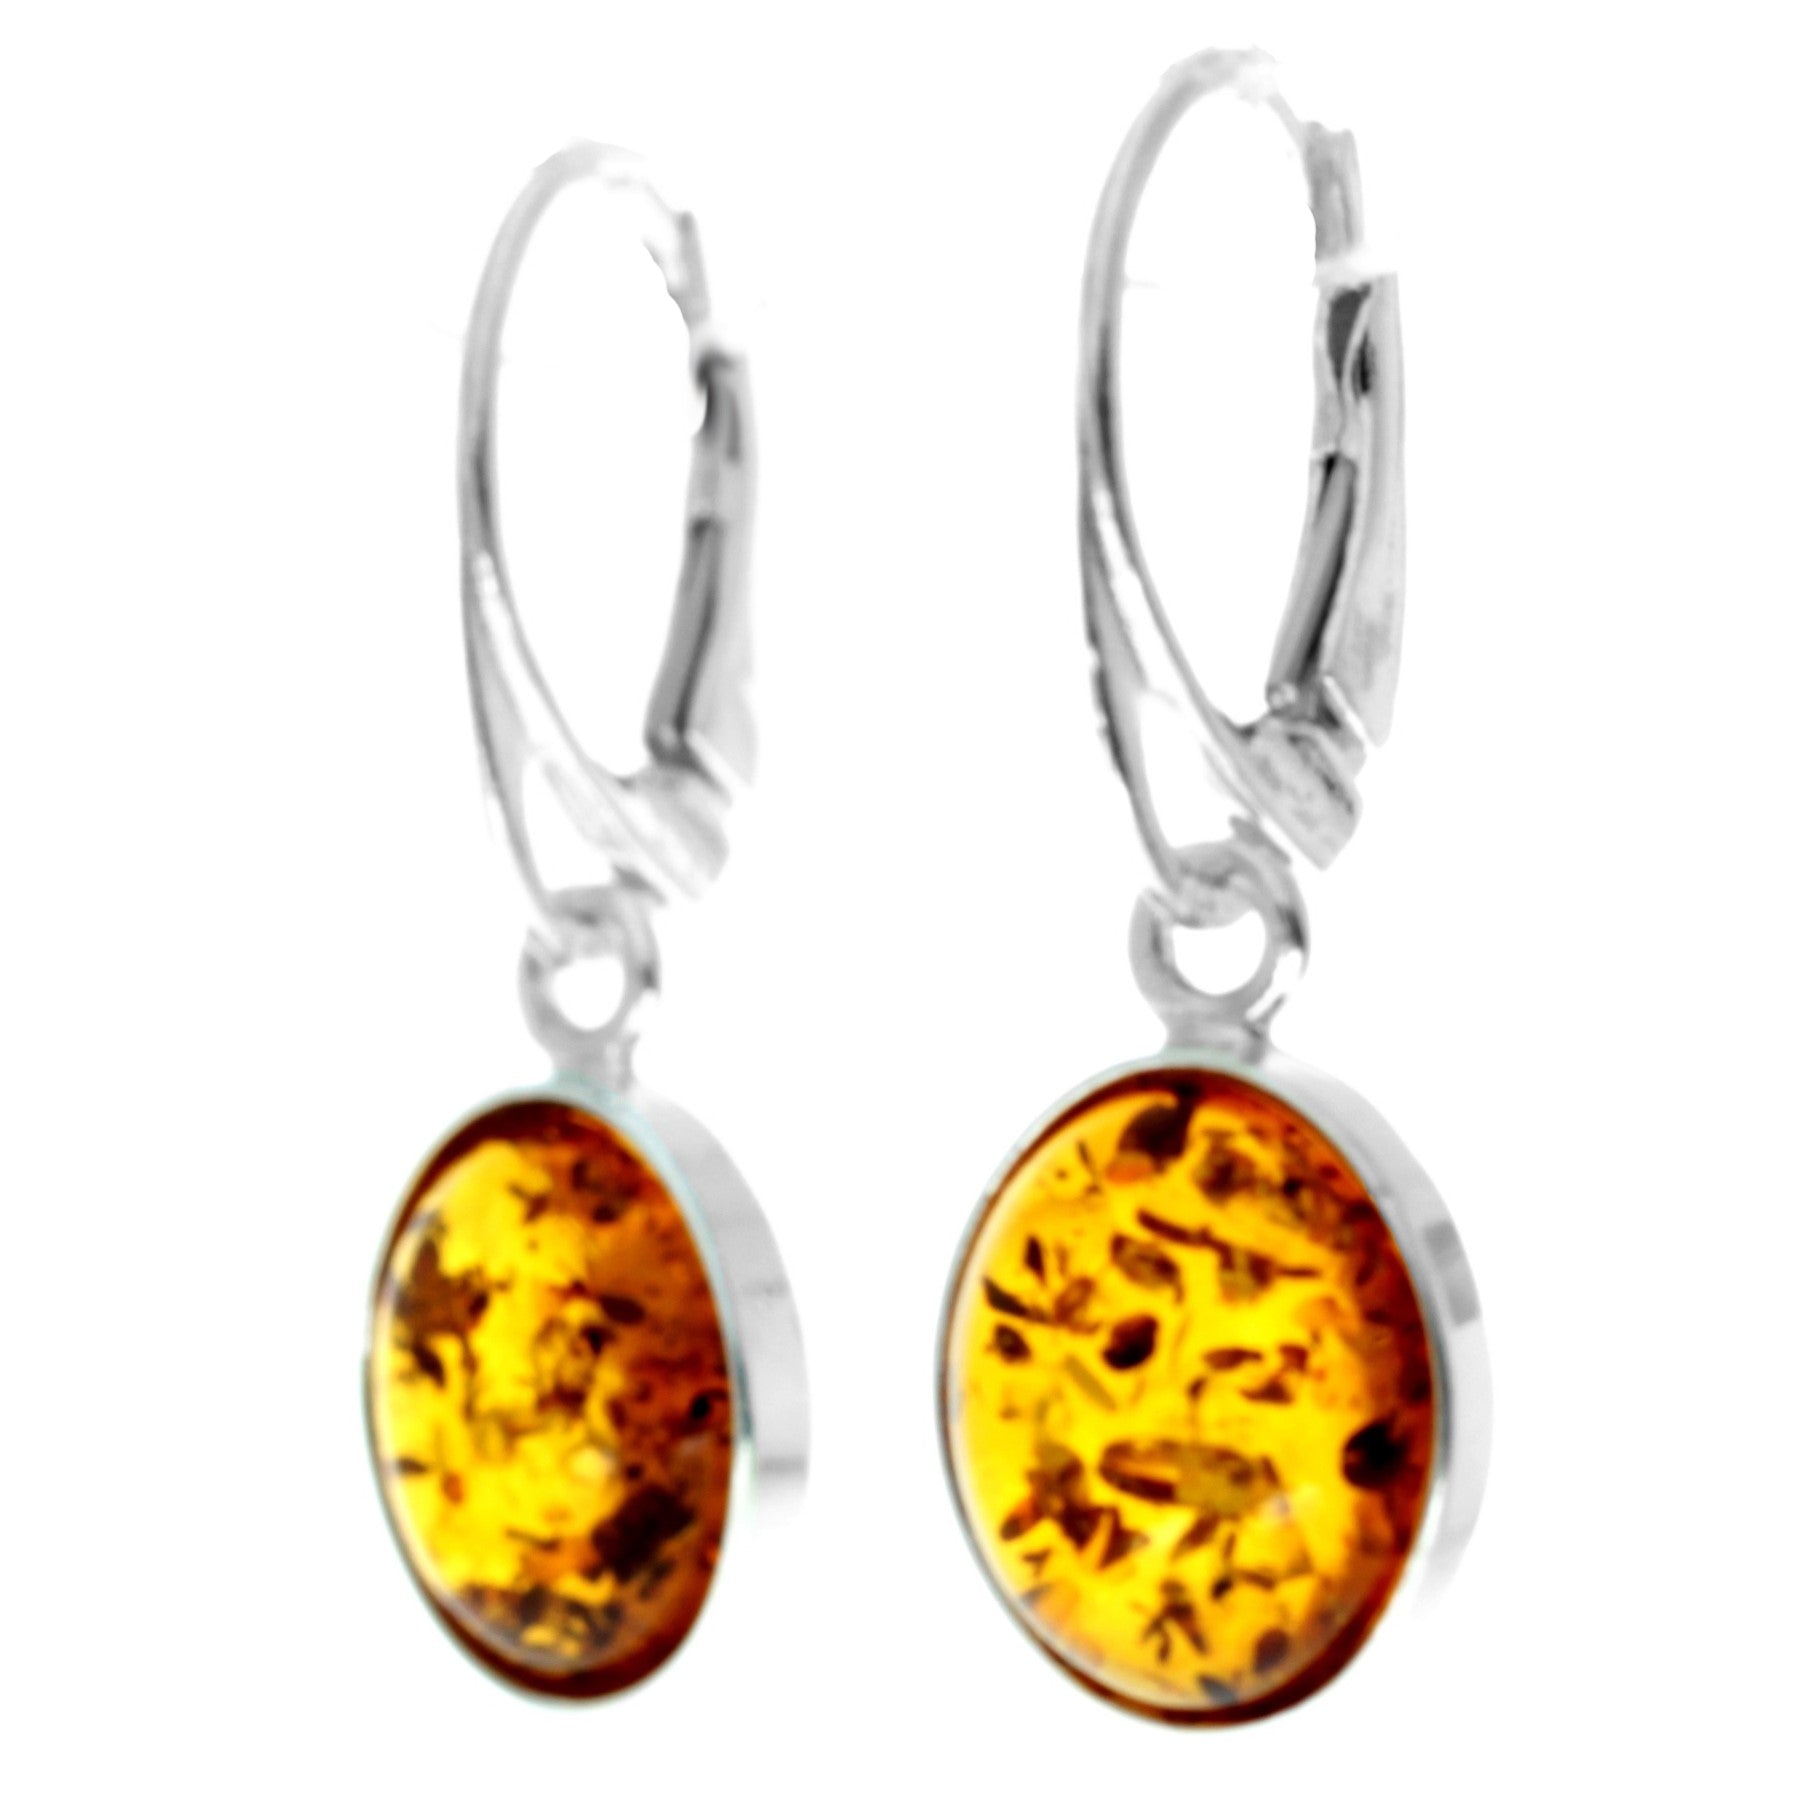 925 Sterling Silver & Genuine Baltic Amber Classic Drop Dangling Earrings - 8560